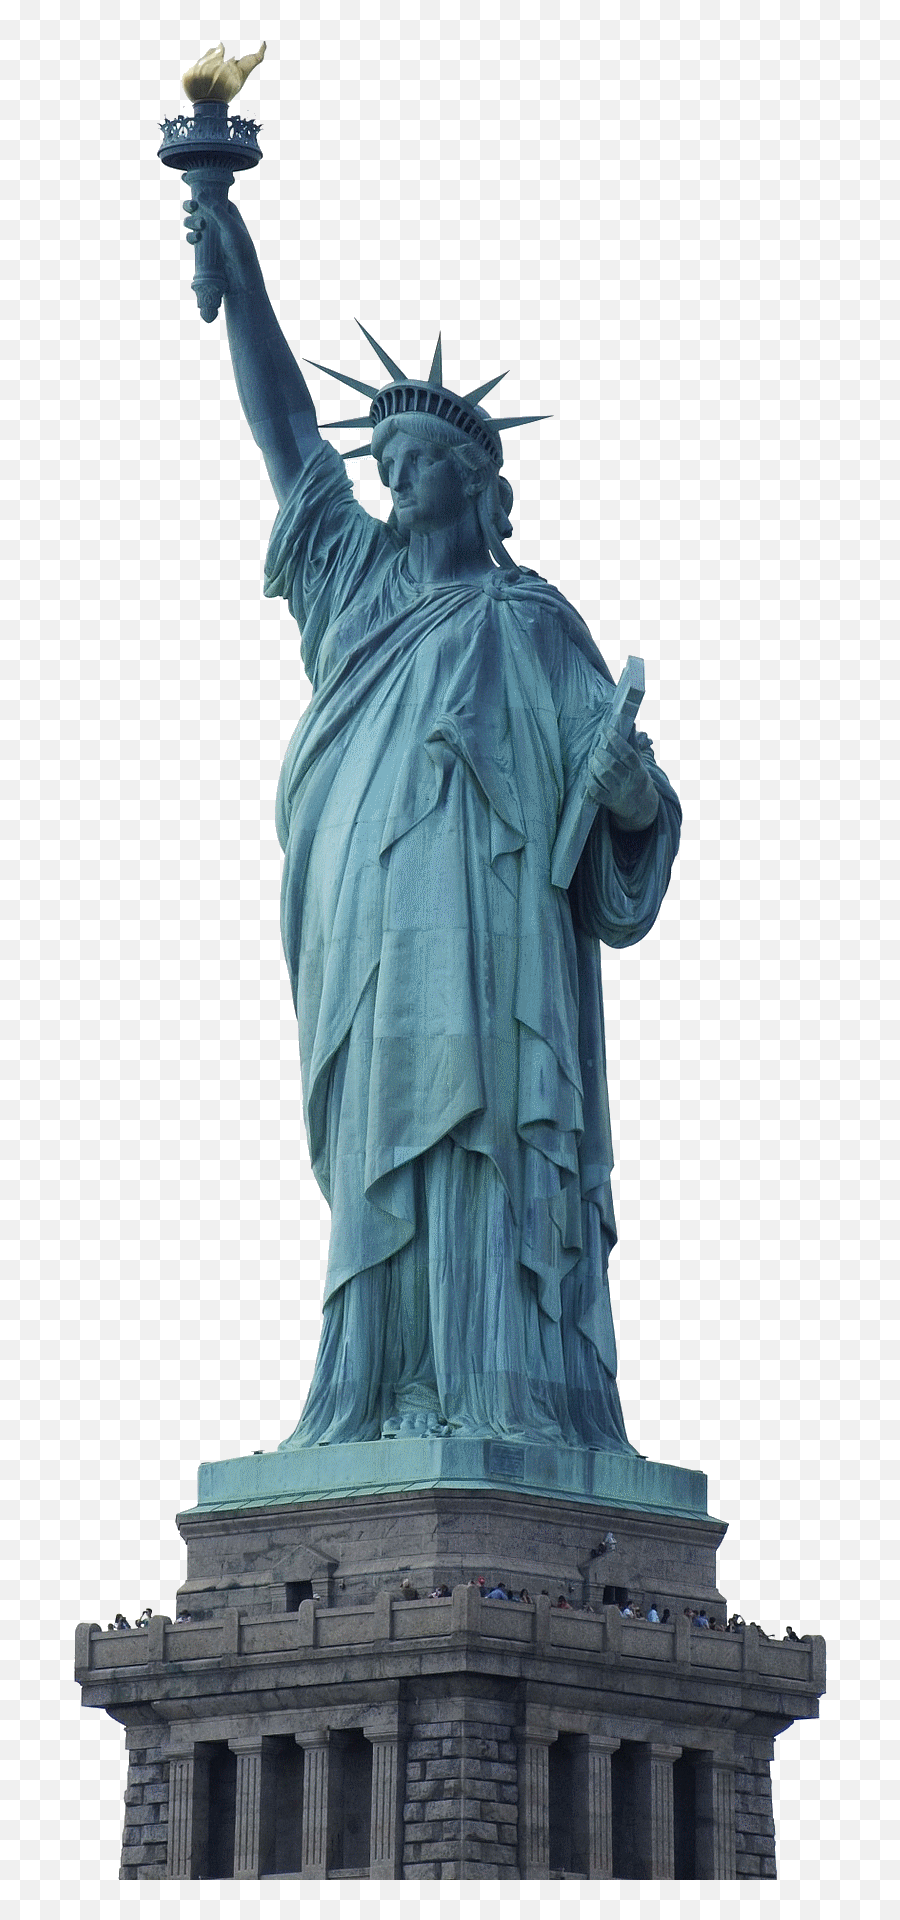 Statue Of Liberty Ellis Island Image Png Transparent